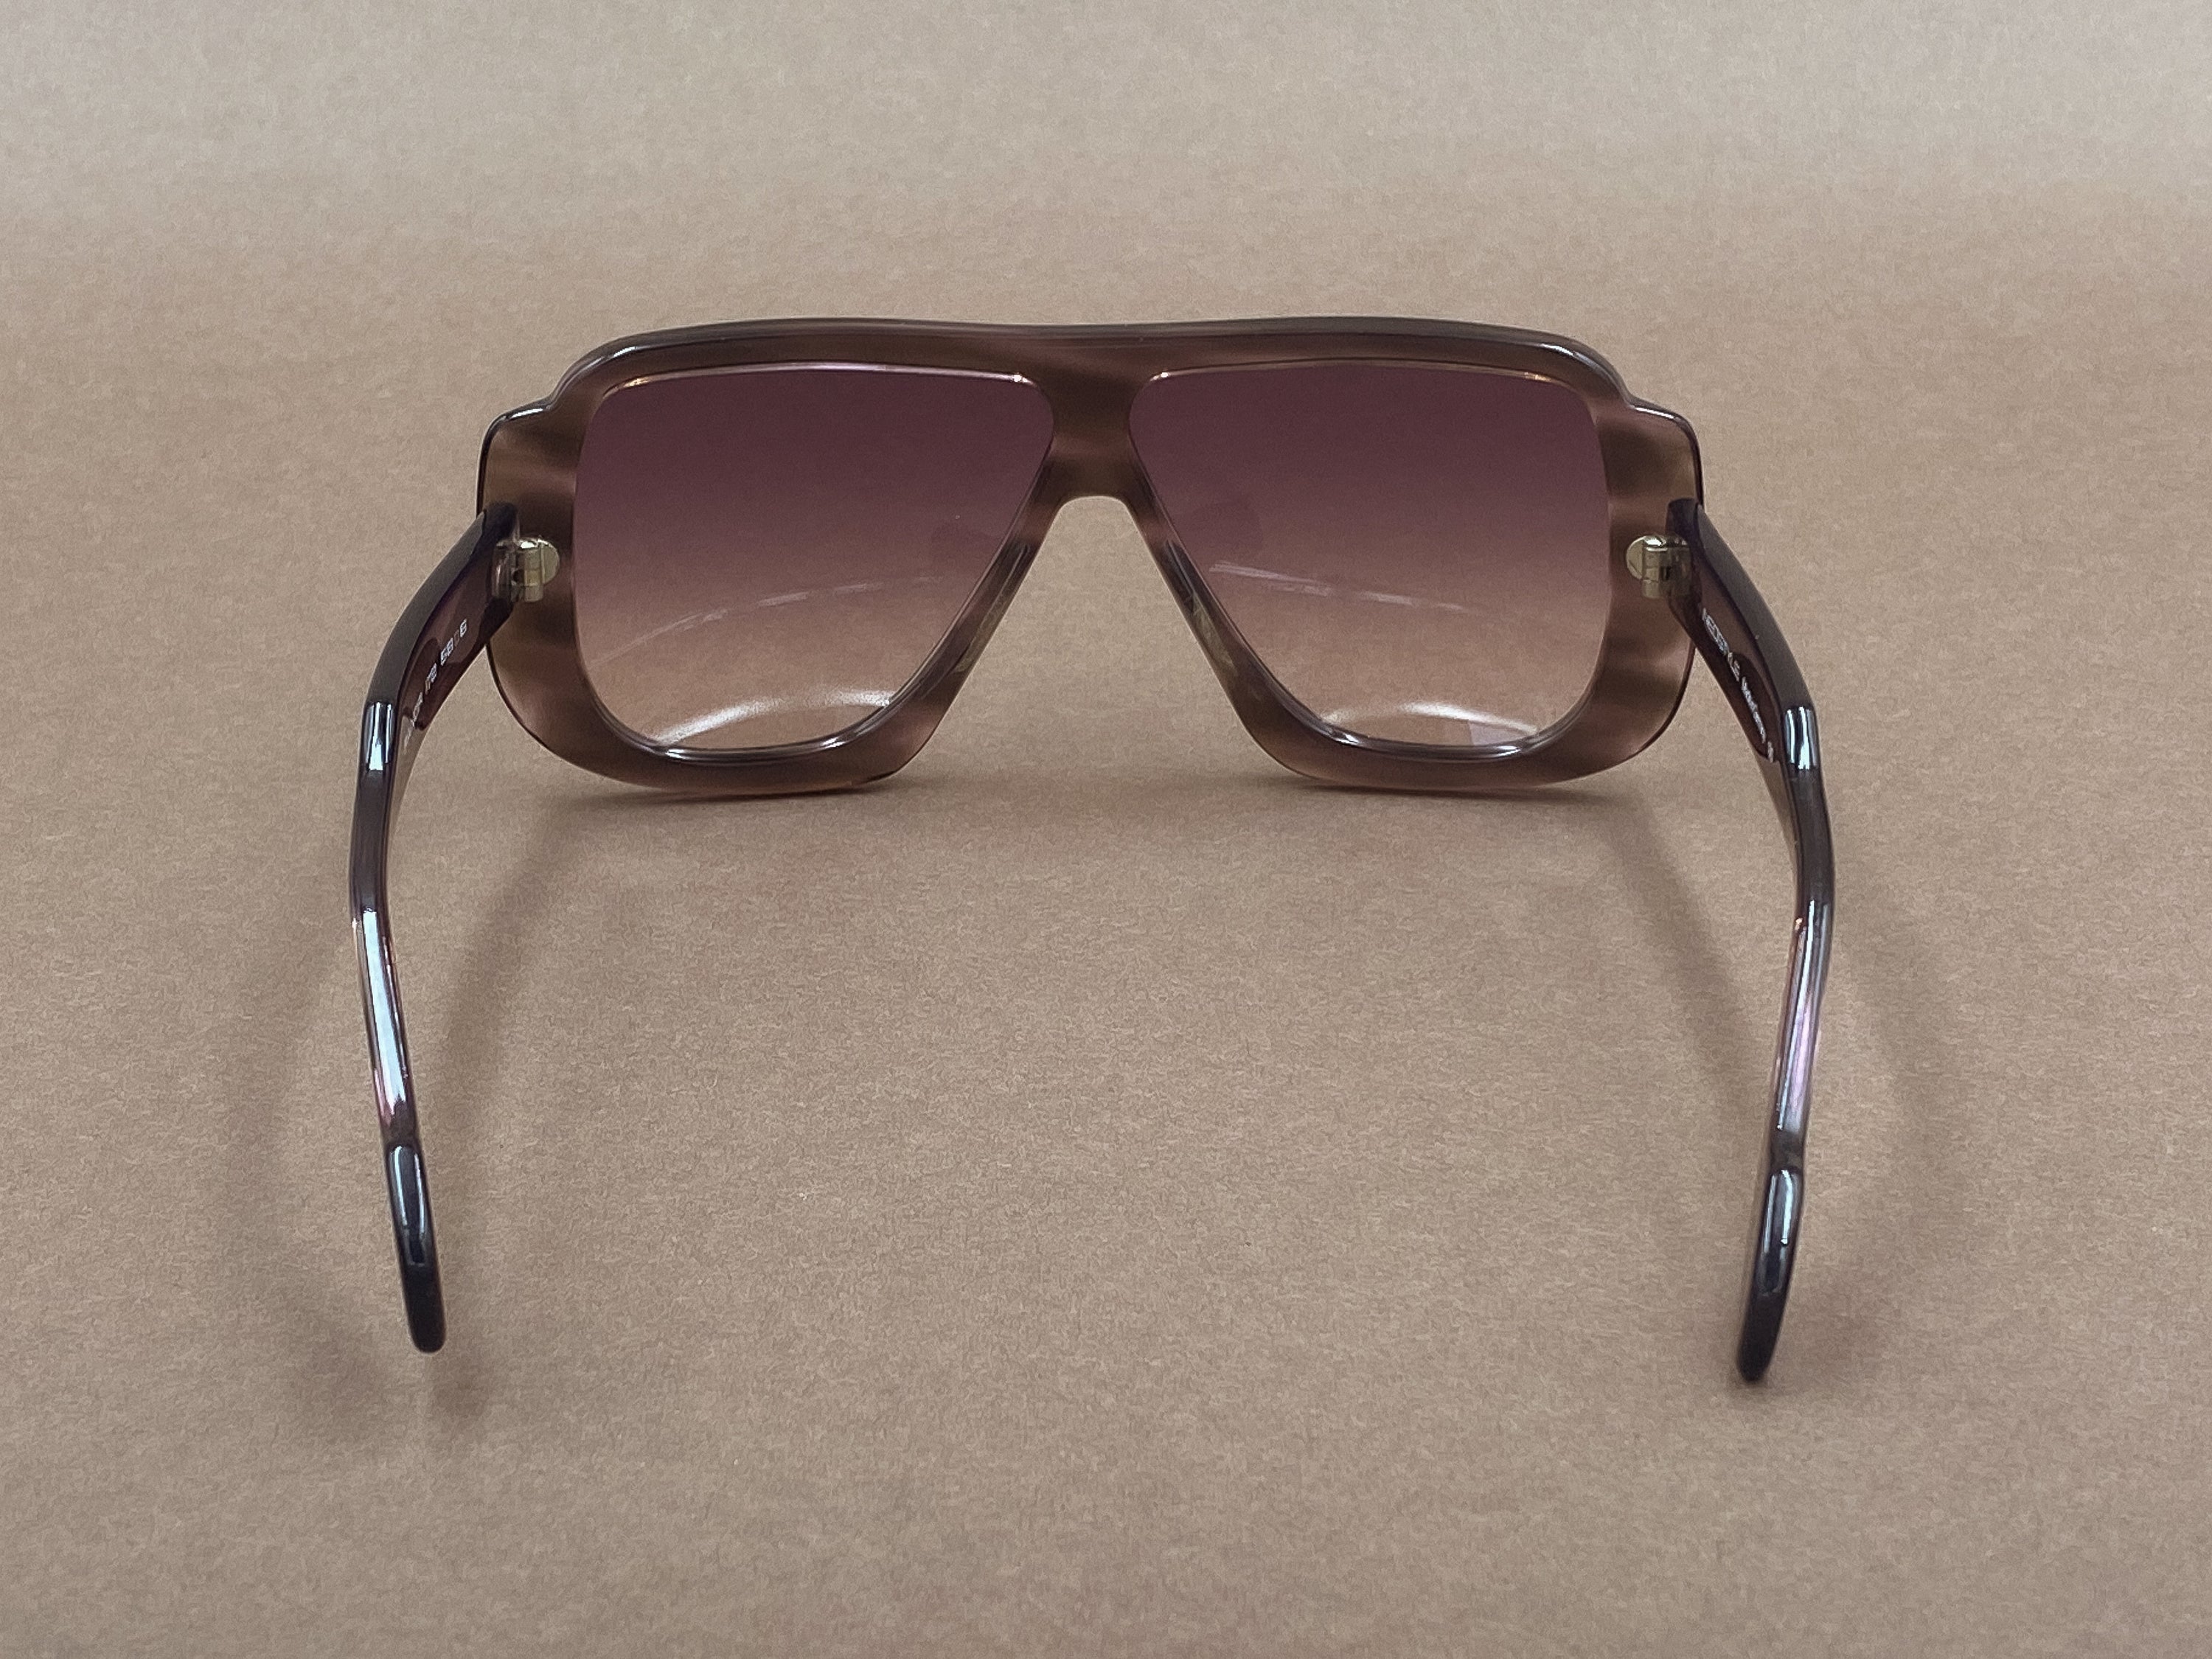 Neostyle 172 sunglasses